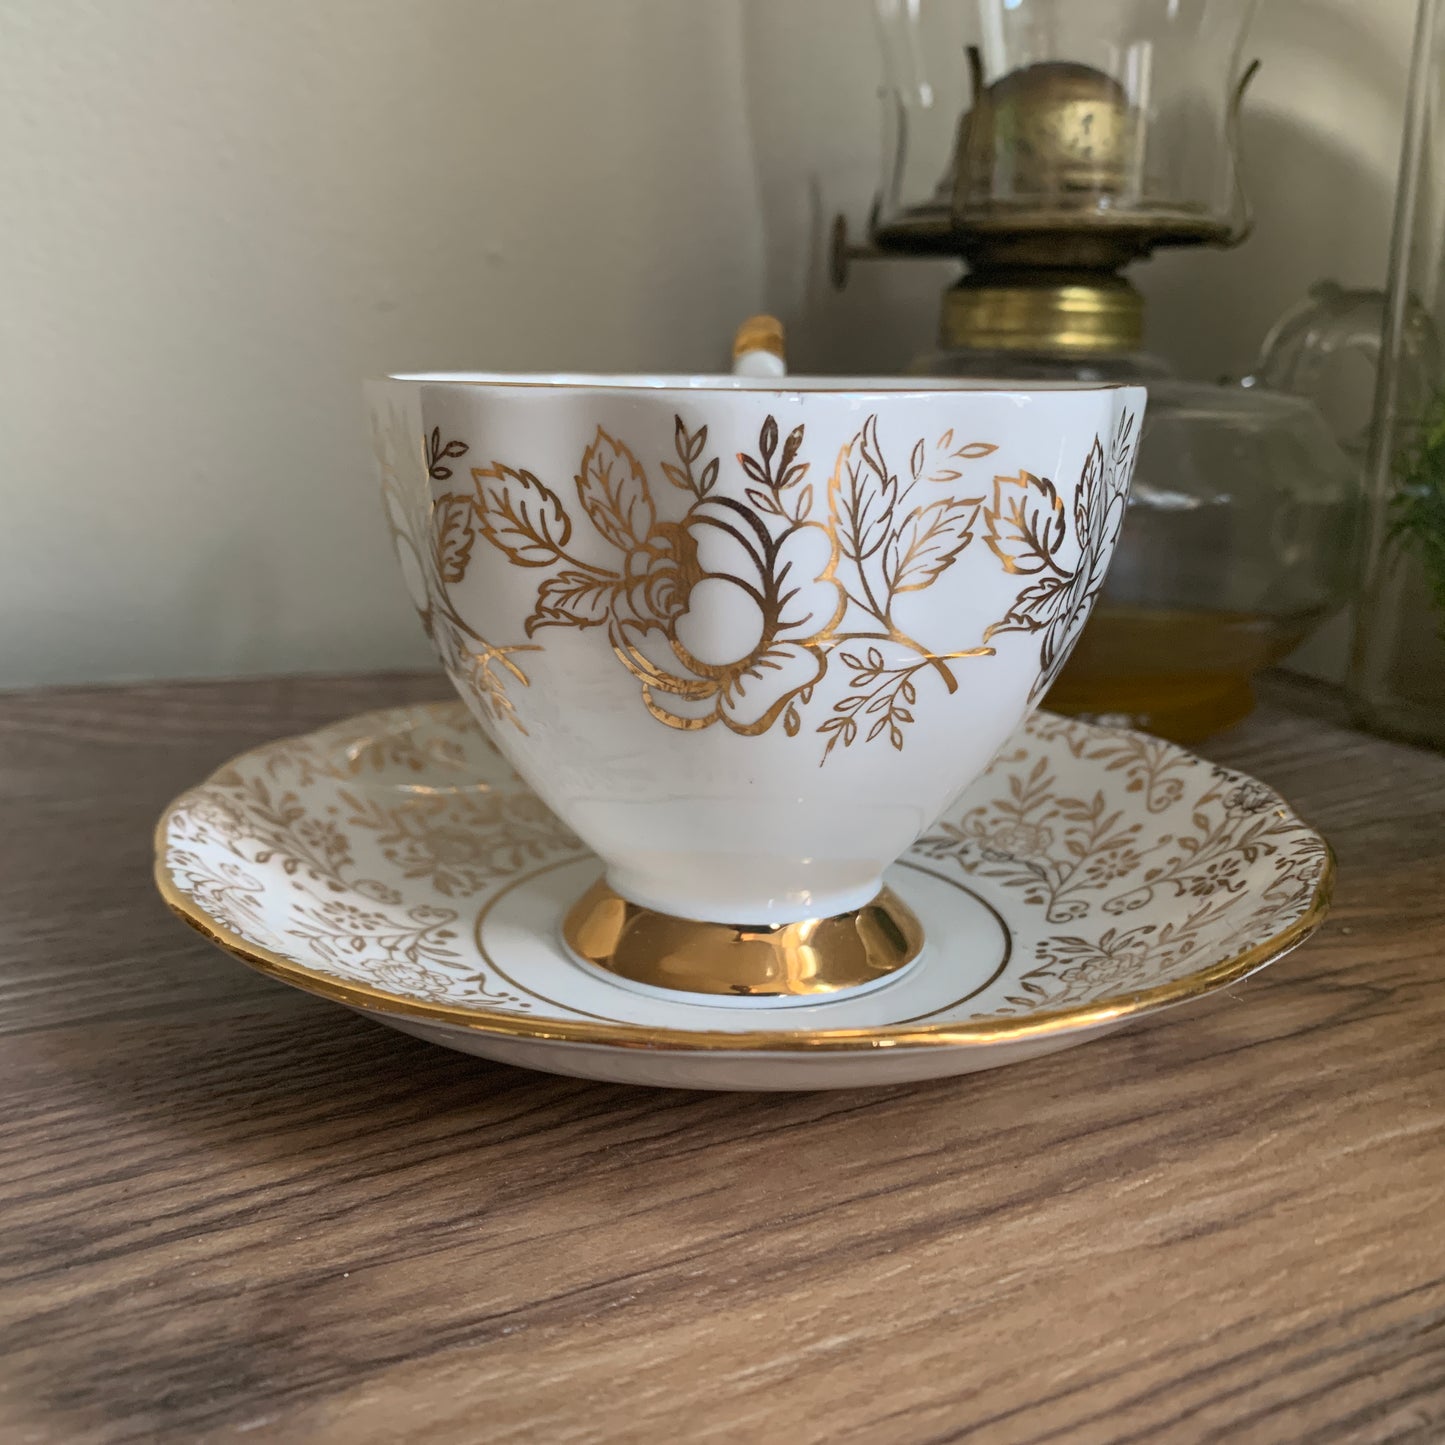 Golden Floral Vintage Queen Anne Teacup and Saucer, Slightly Mis Matched Tea Cup